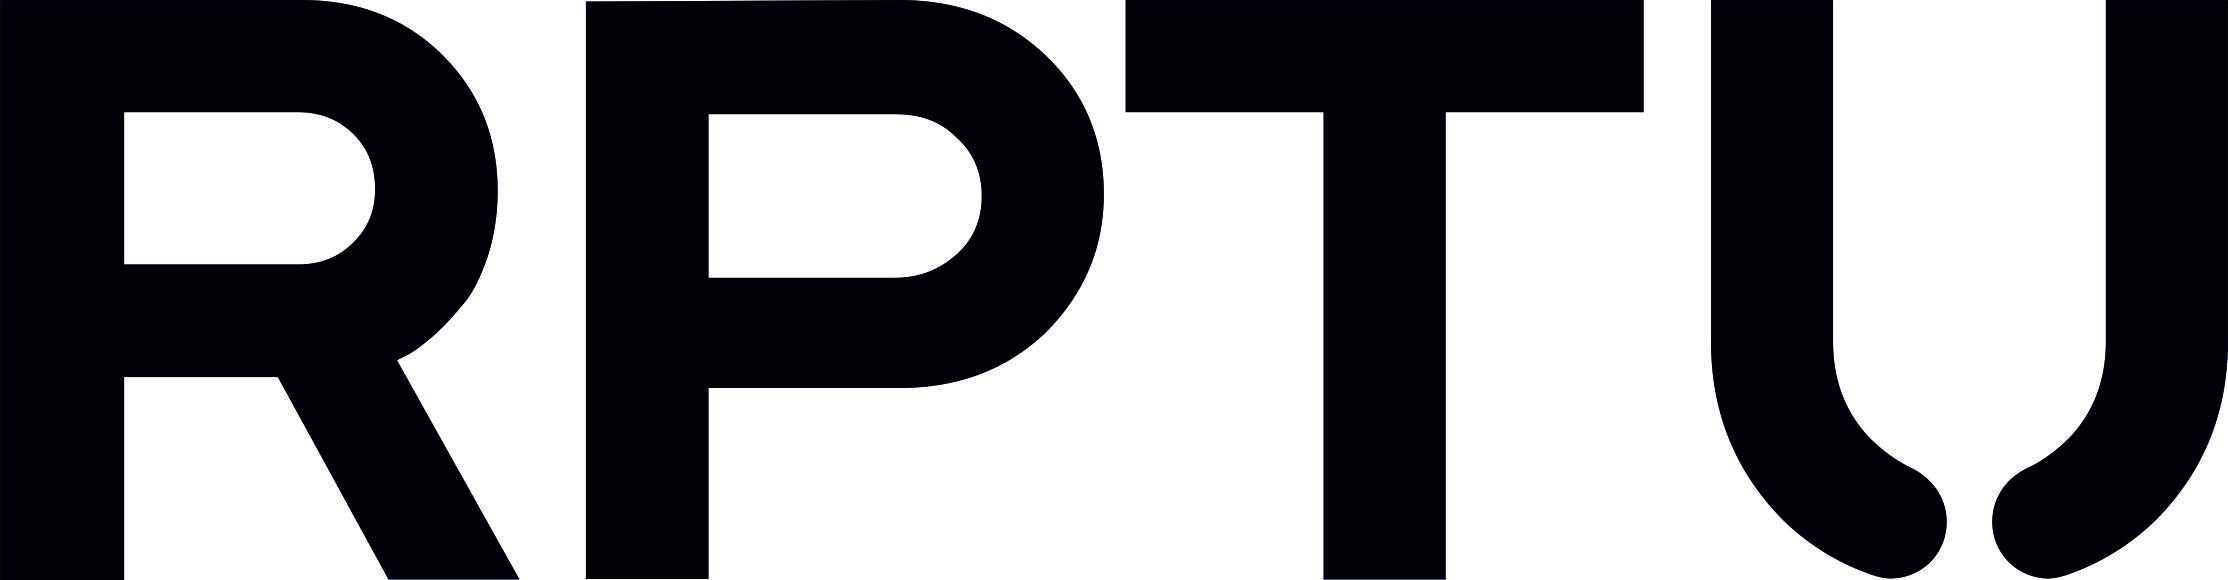 rptu logo minimal schwarz